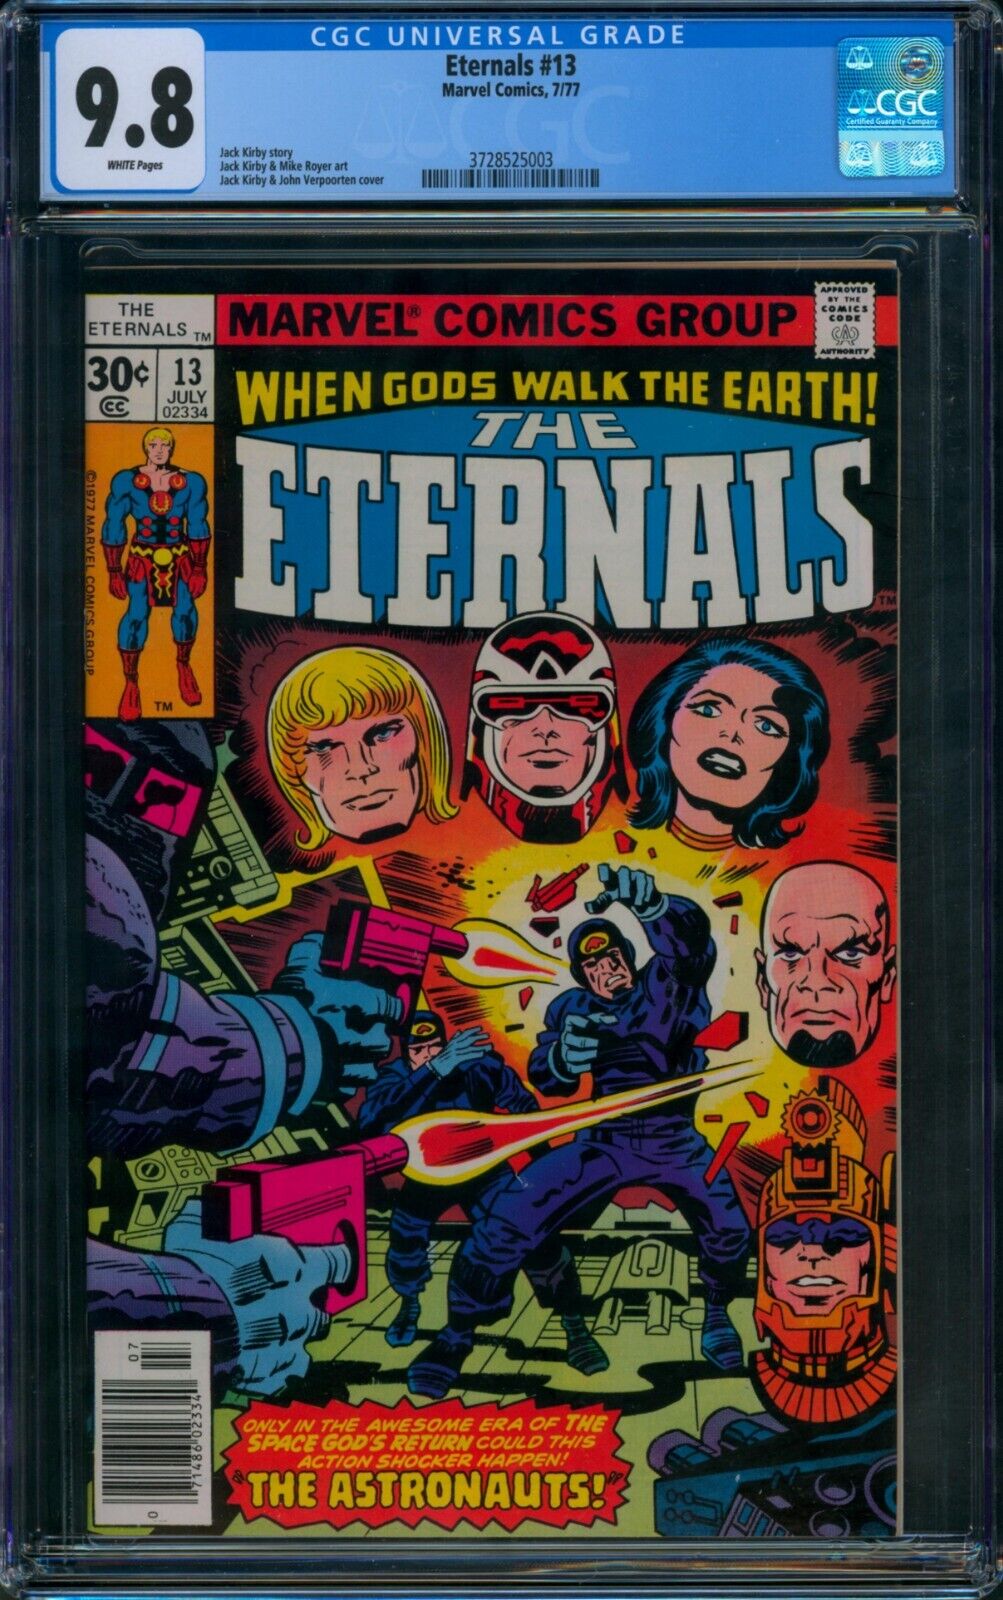 THE ETERNALS #13 ❄️ CGC 9.8 WHITE PGs ❄️ Gilgamesh Jack Kirby Marvel Comic 1977